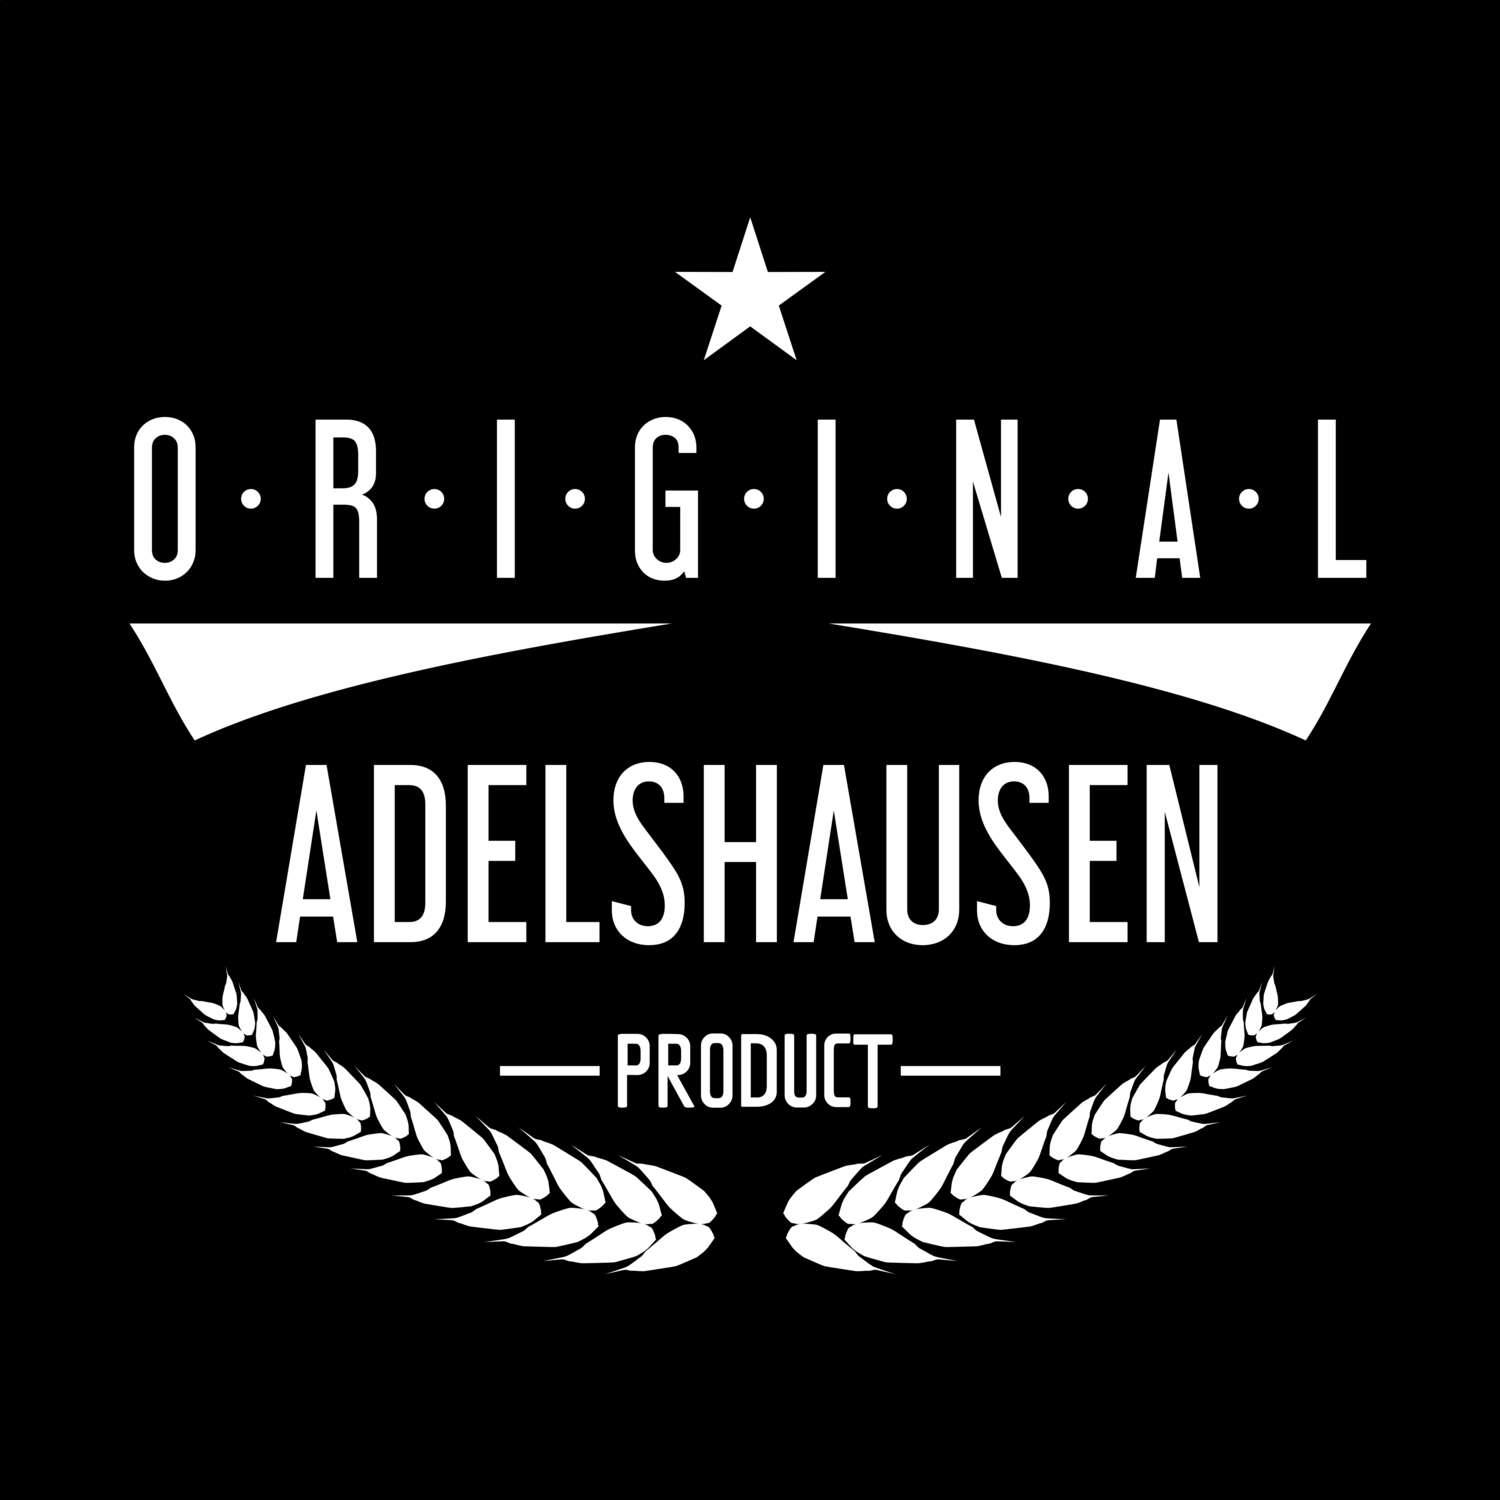 Adelshausen T-Shirt »Original Product«